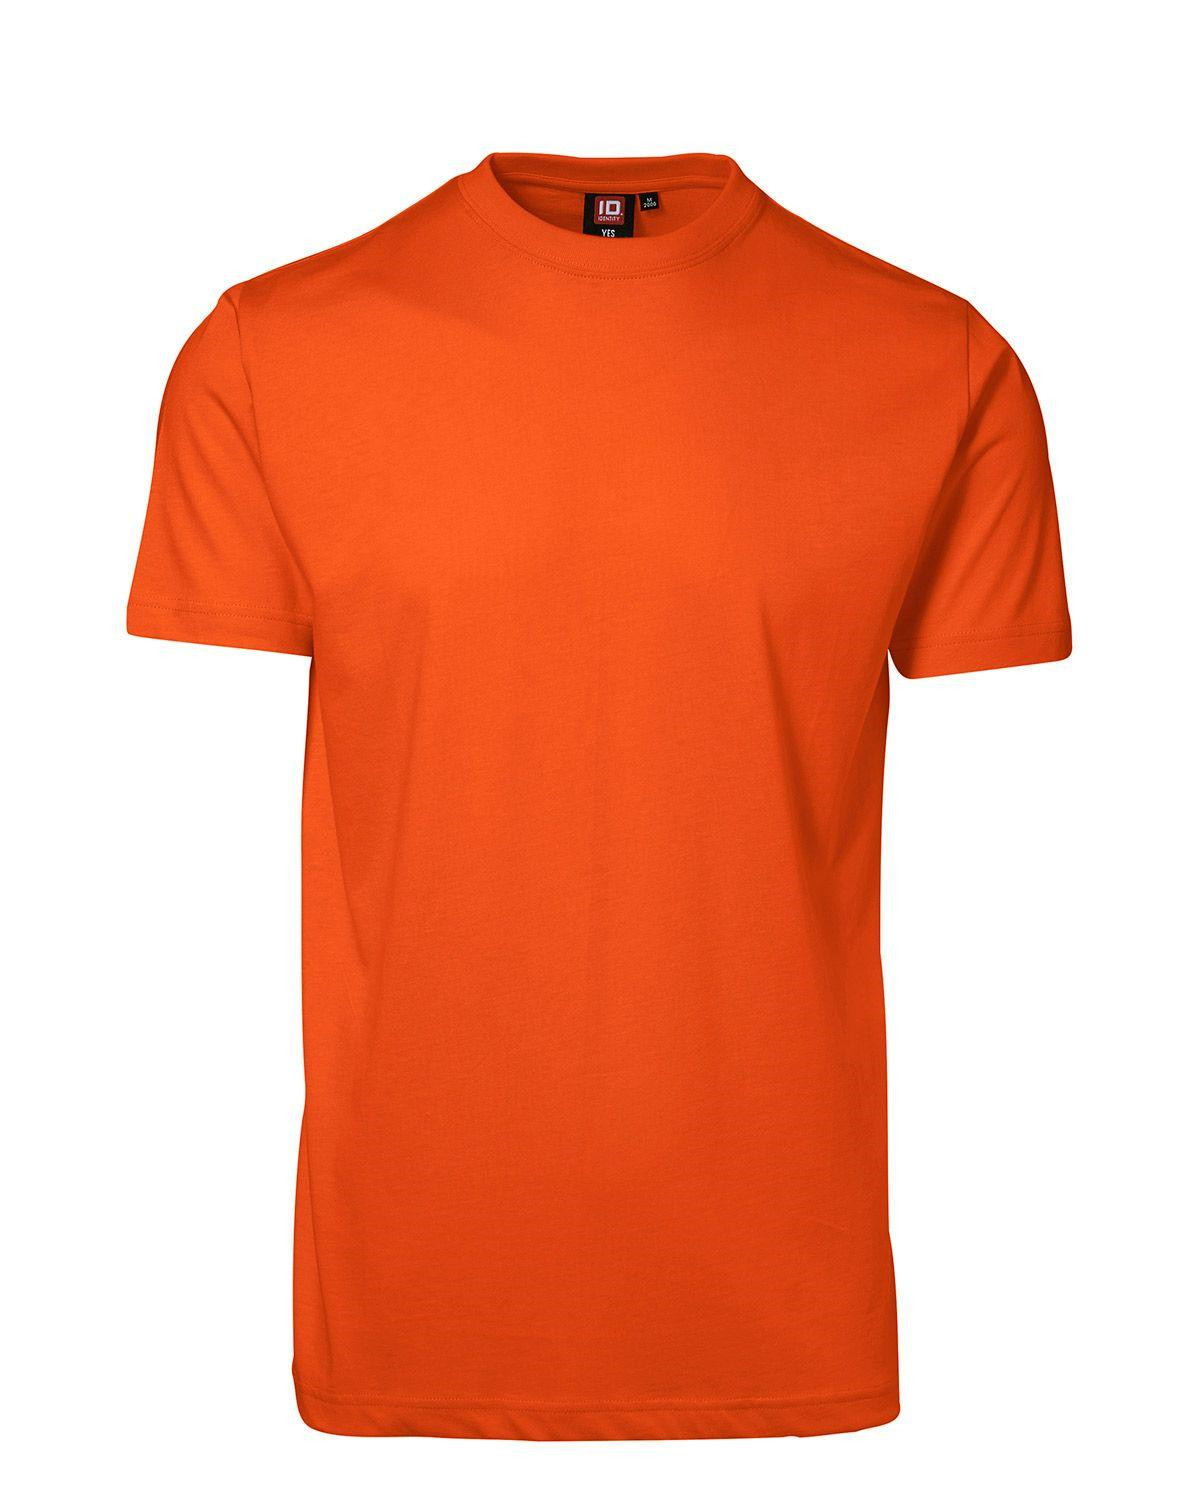 ID YES T-shirt (Orange, XL)